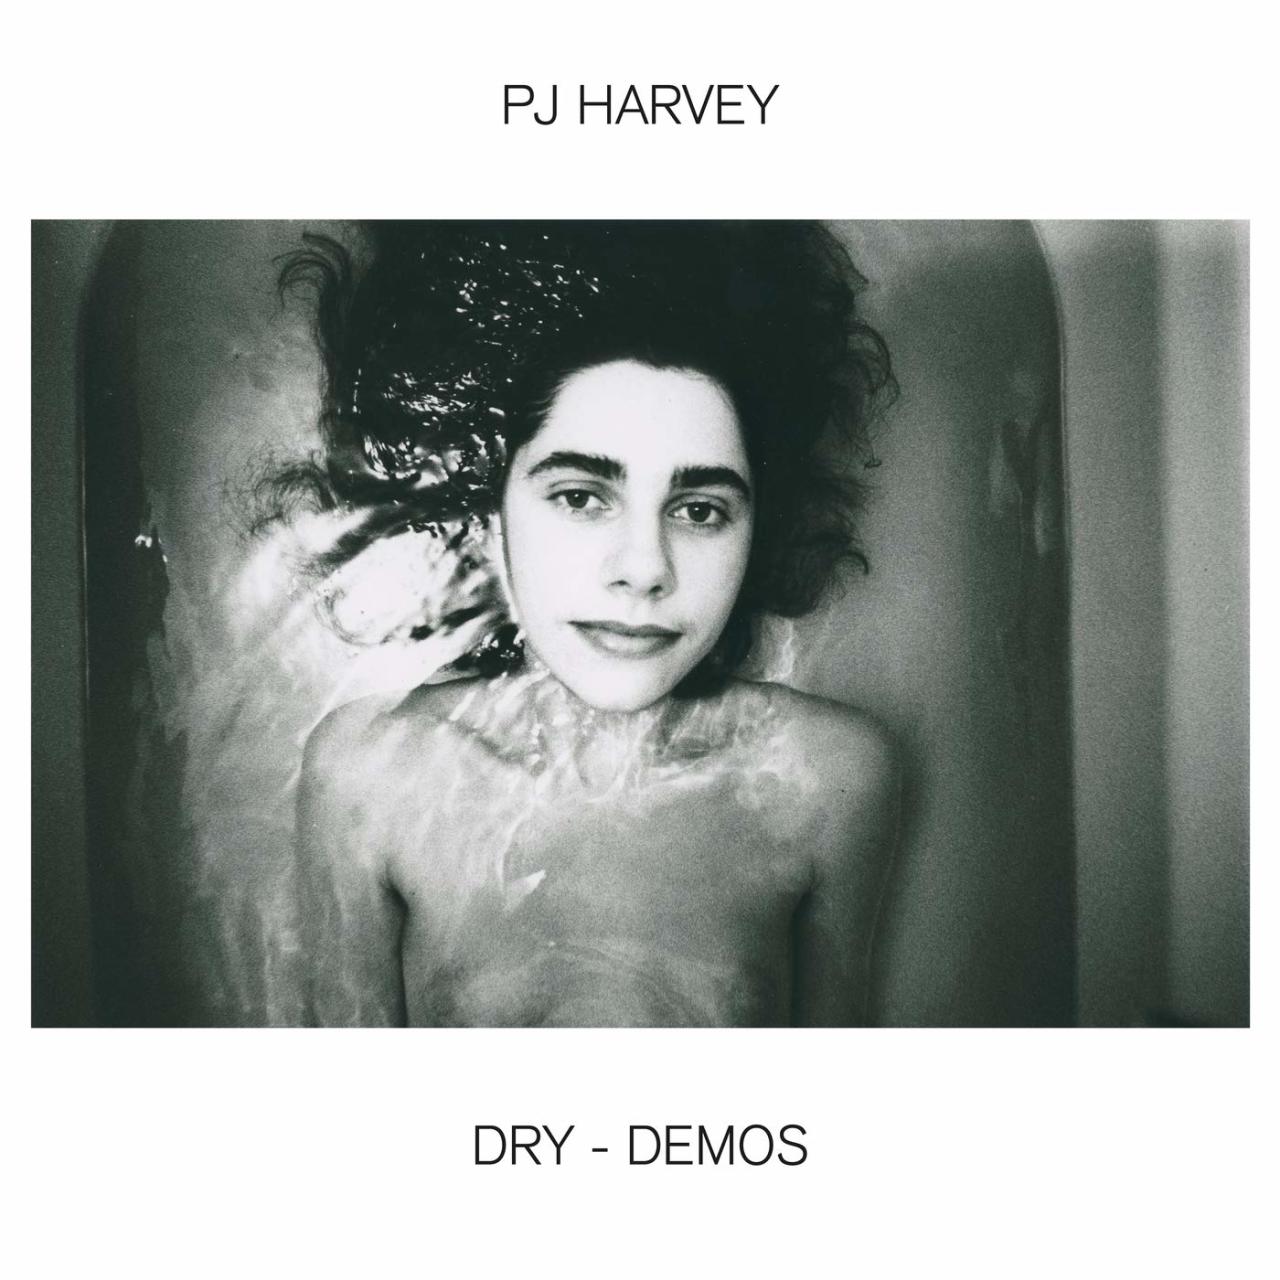 PJ HARVEY - DRY DEMOS (1992) - LP 180GR 2020 EDITION SIFIR PLAK